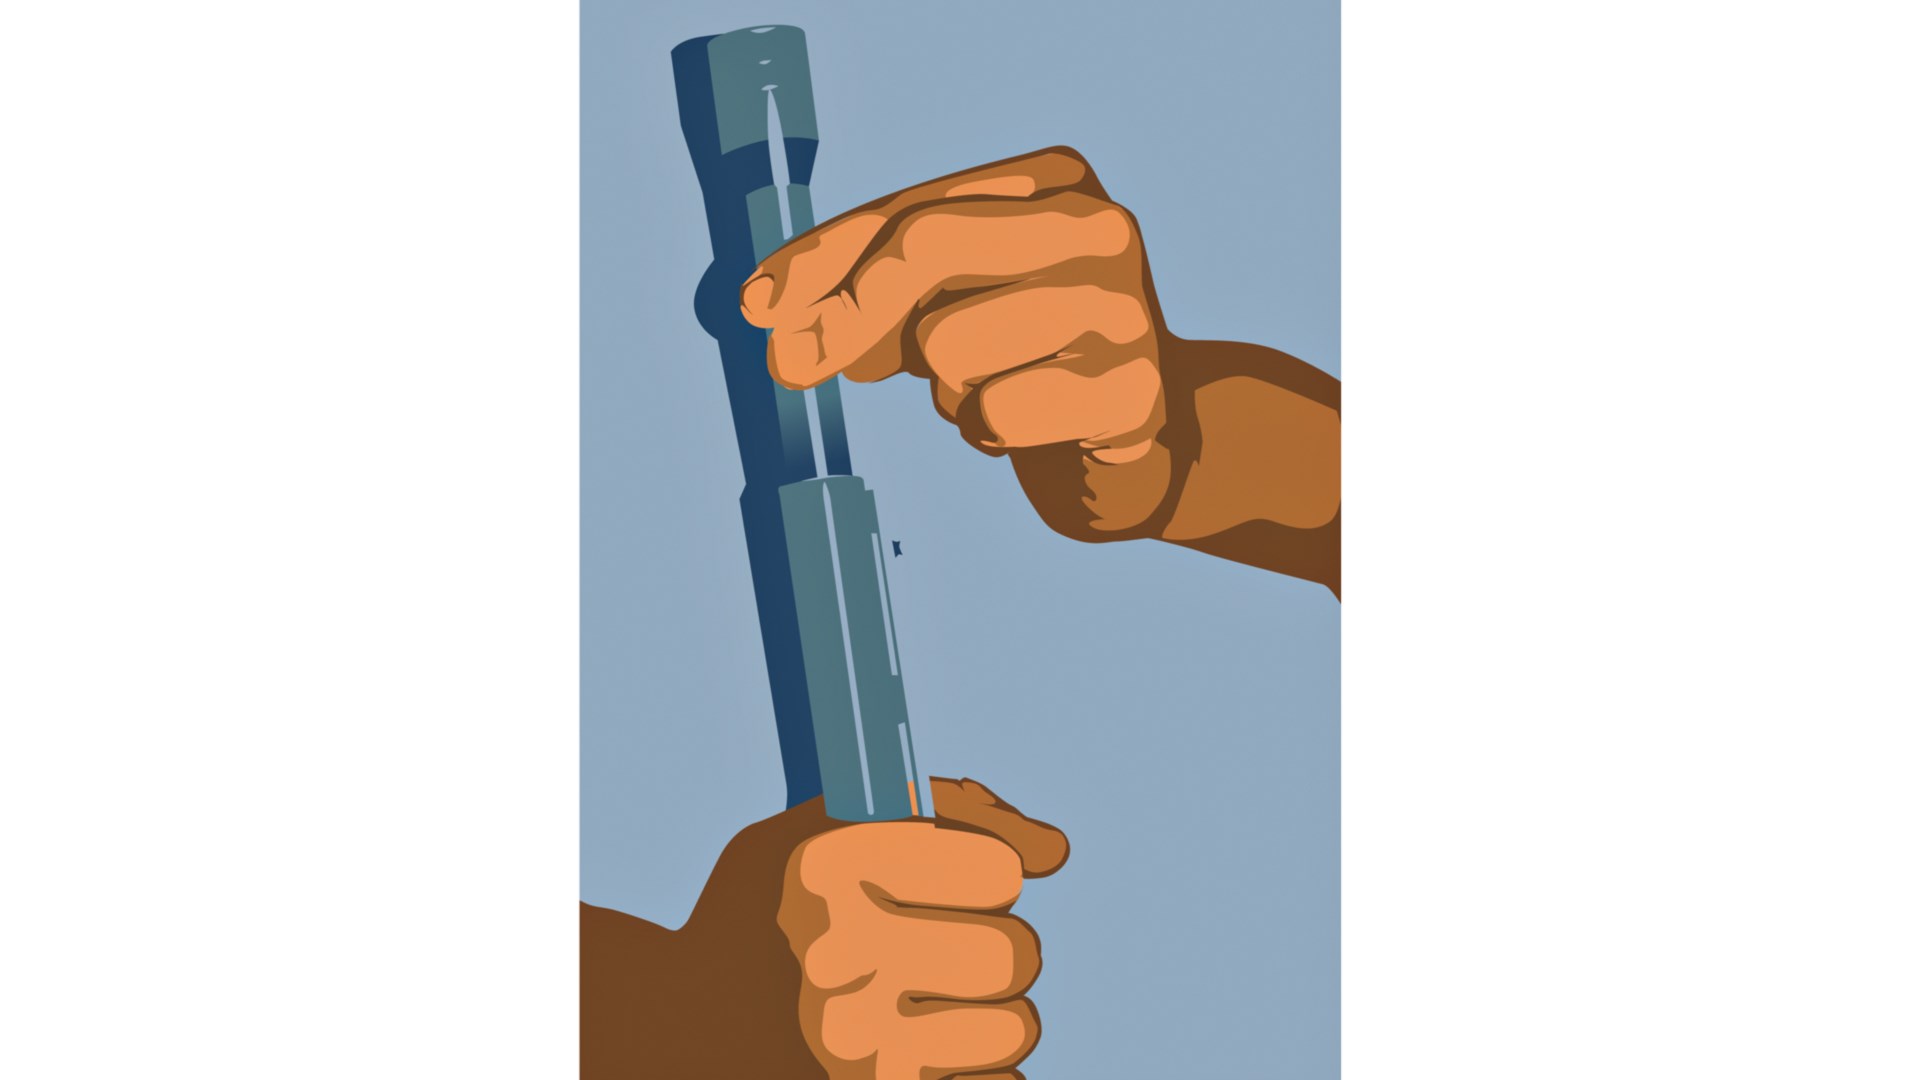 cartoonized rendering of shotgun barrel hands and flashlight for instruction